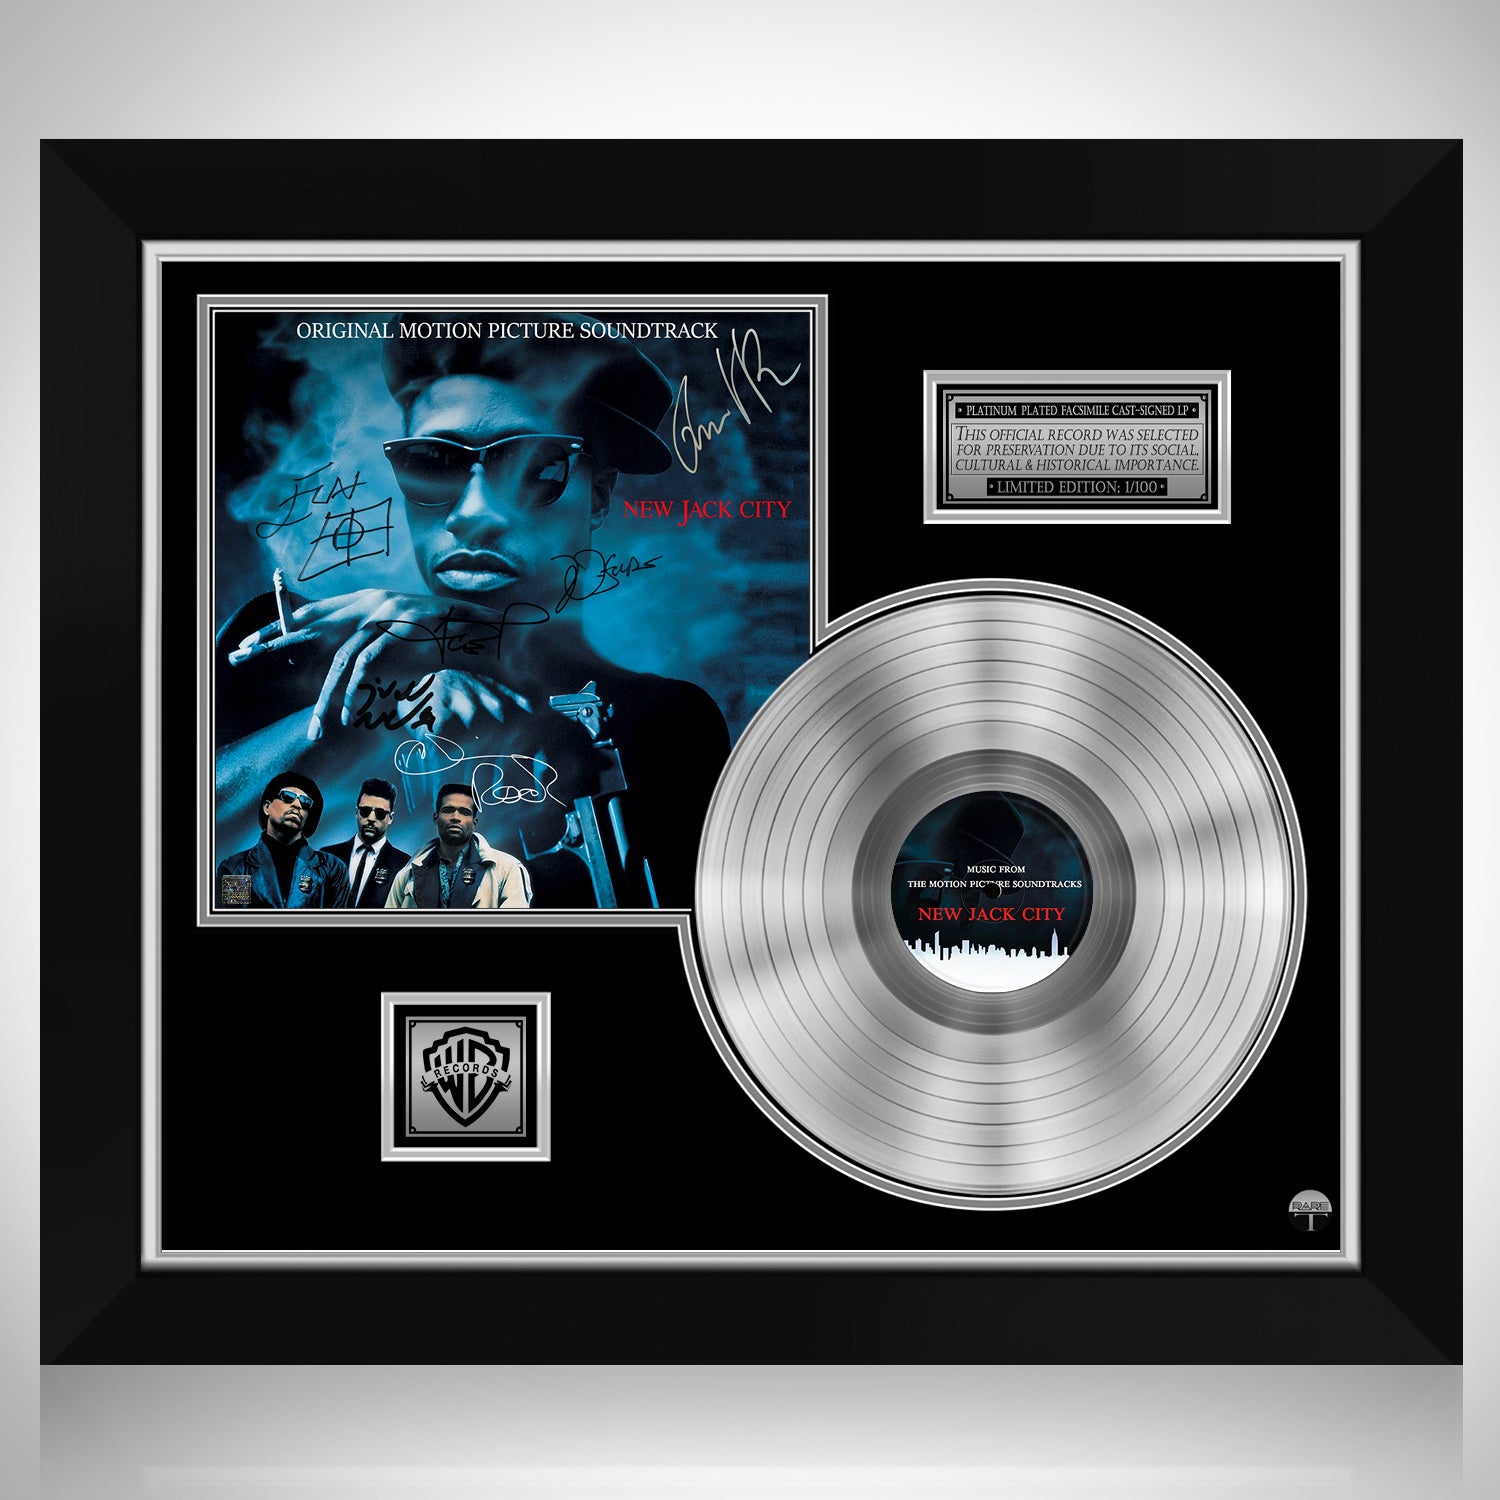 New Jack City - Soundtrack Platinum LP Limited Signature Edition 